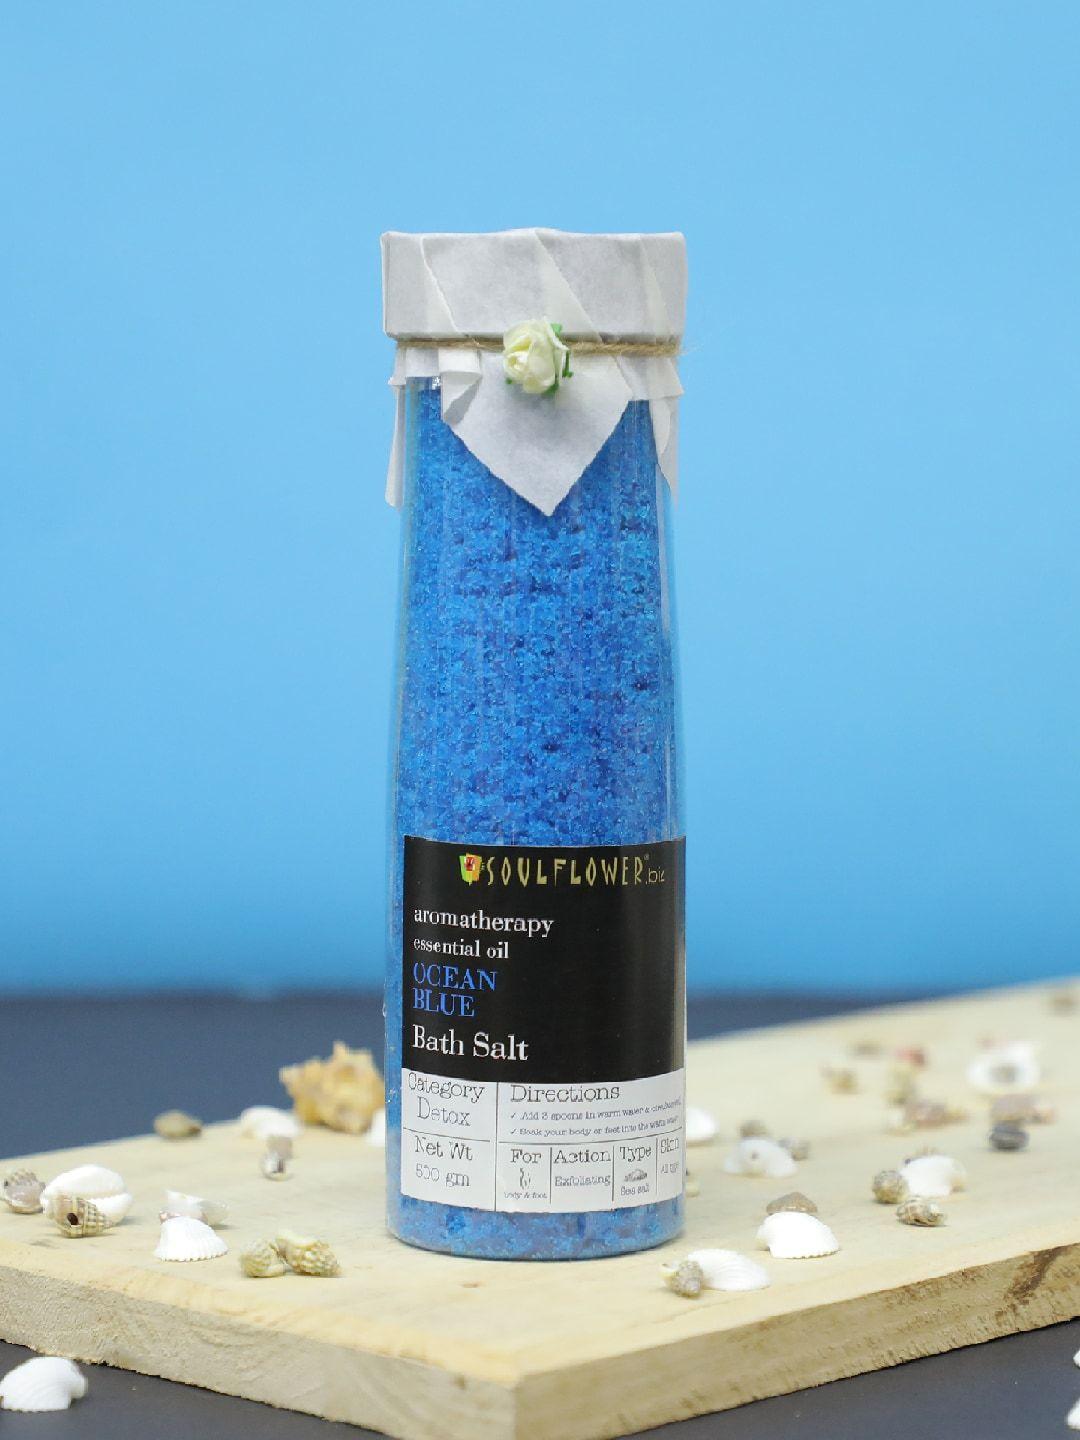 soulflower ocean blue bath salt for body & foot spa with natural sea salt - 500g